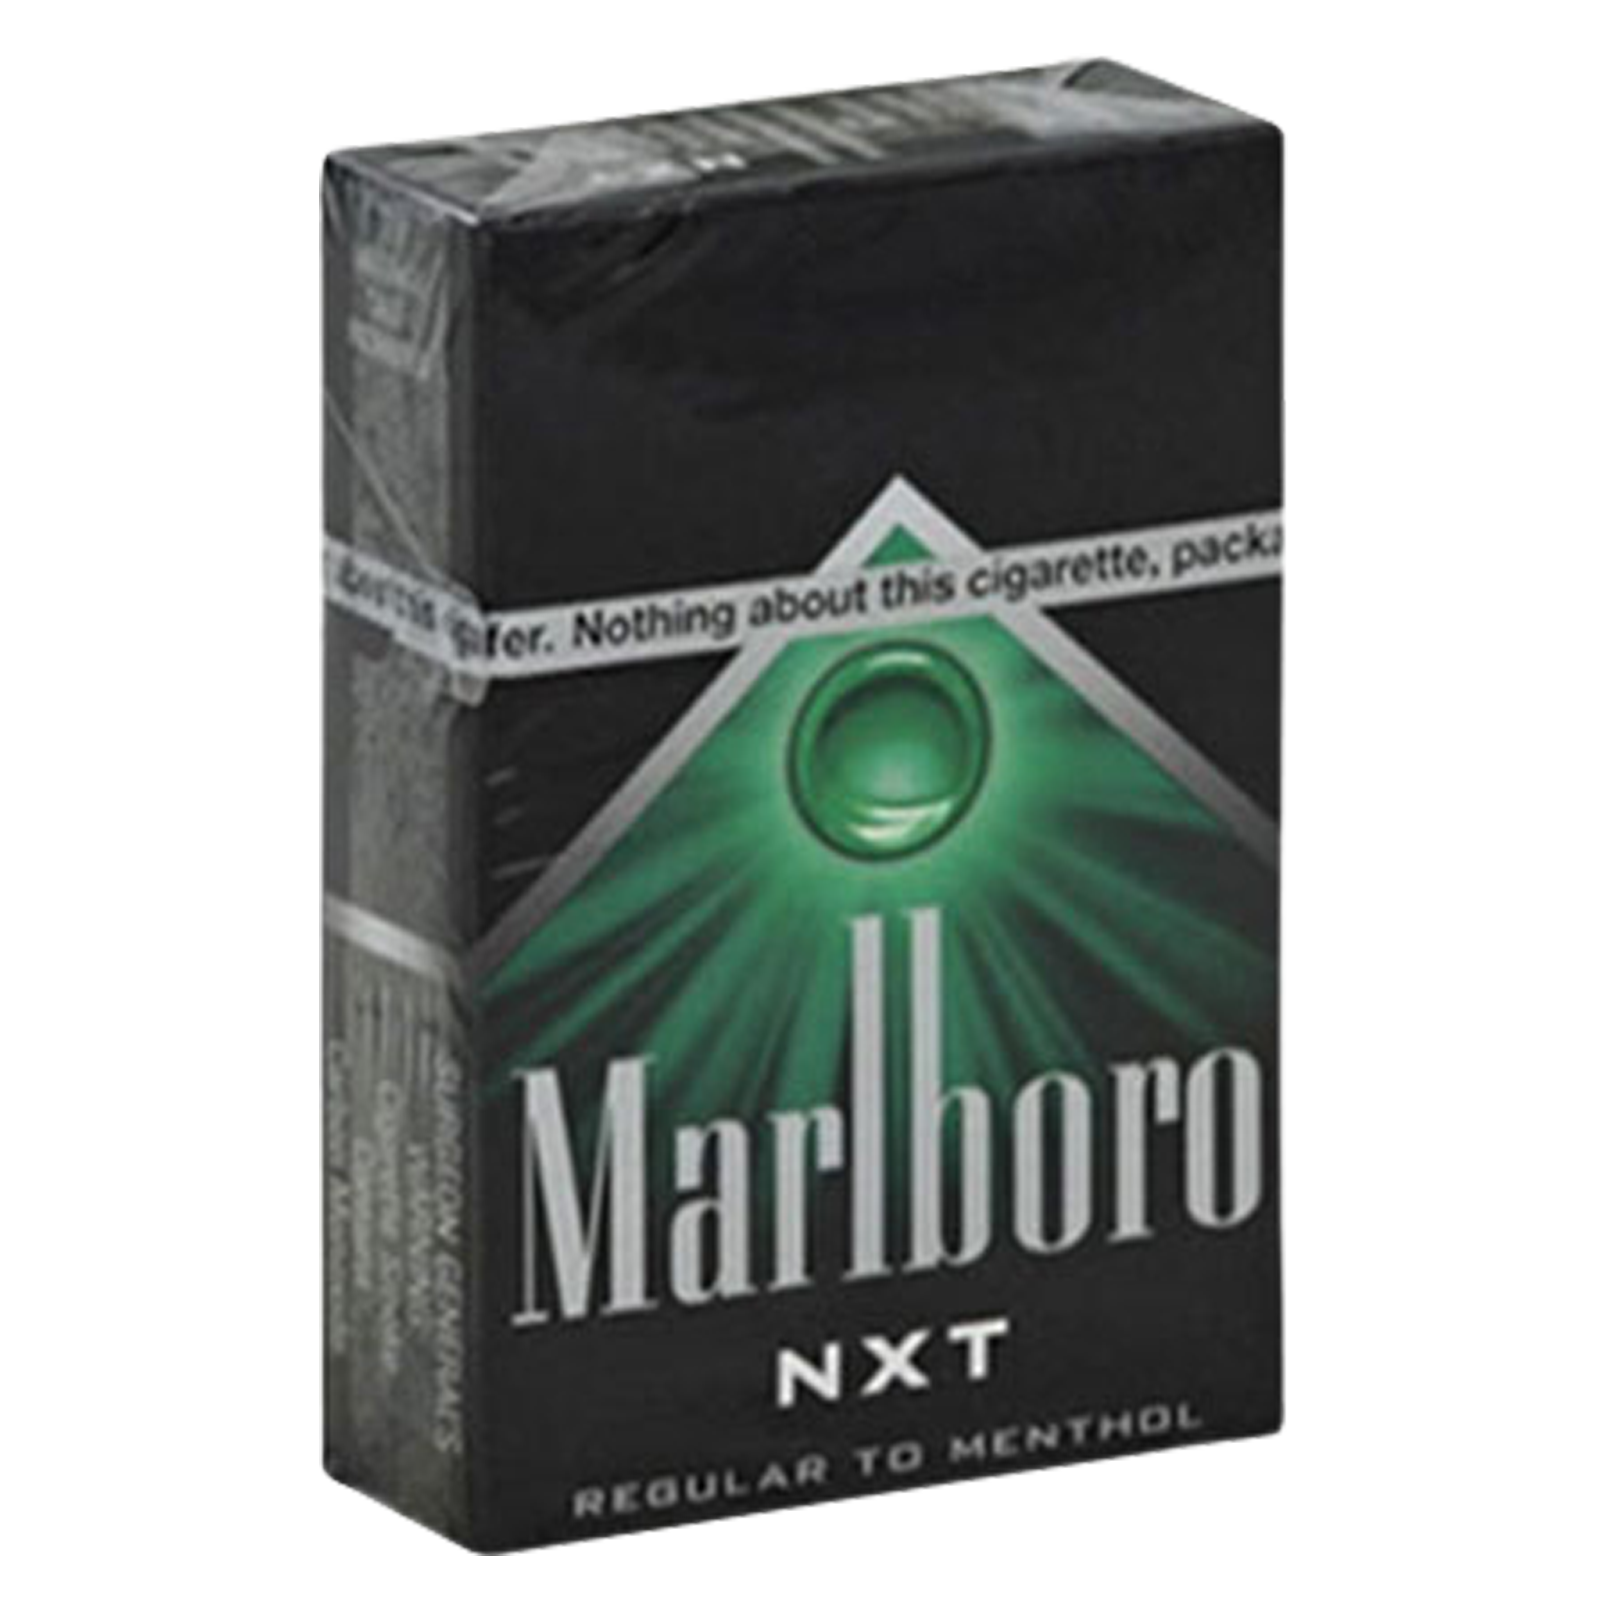 Marlboro NXT Regular to Menthol Cigarettes 20ct Box 1pk